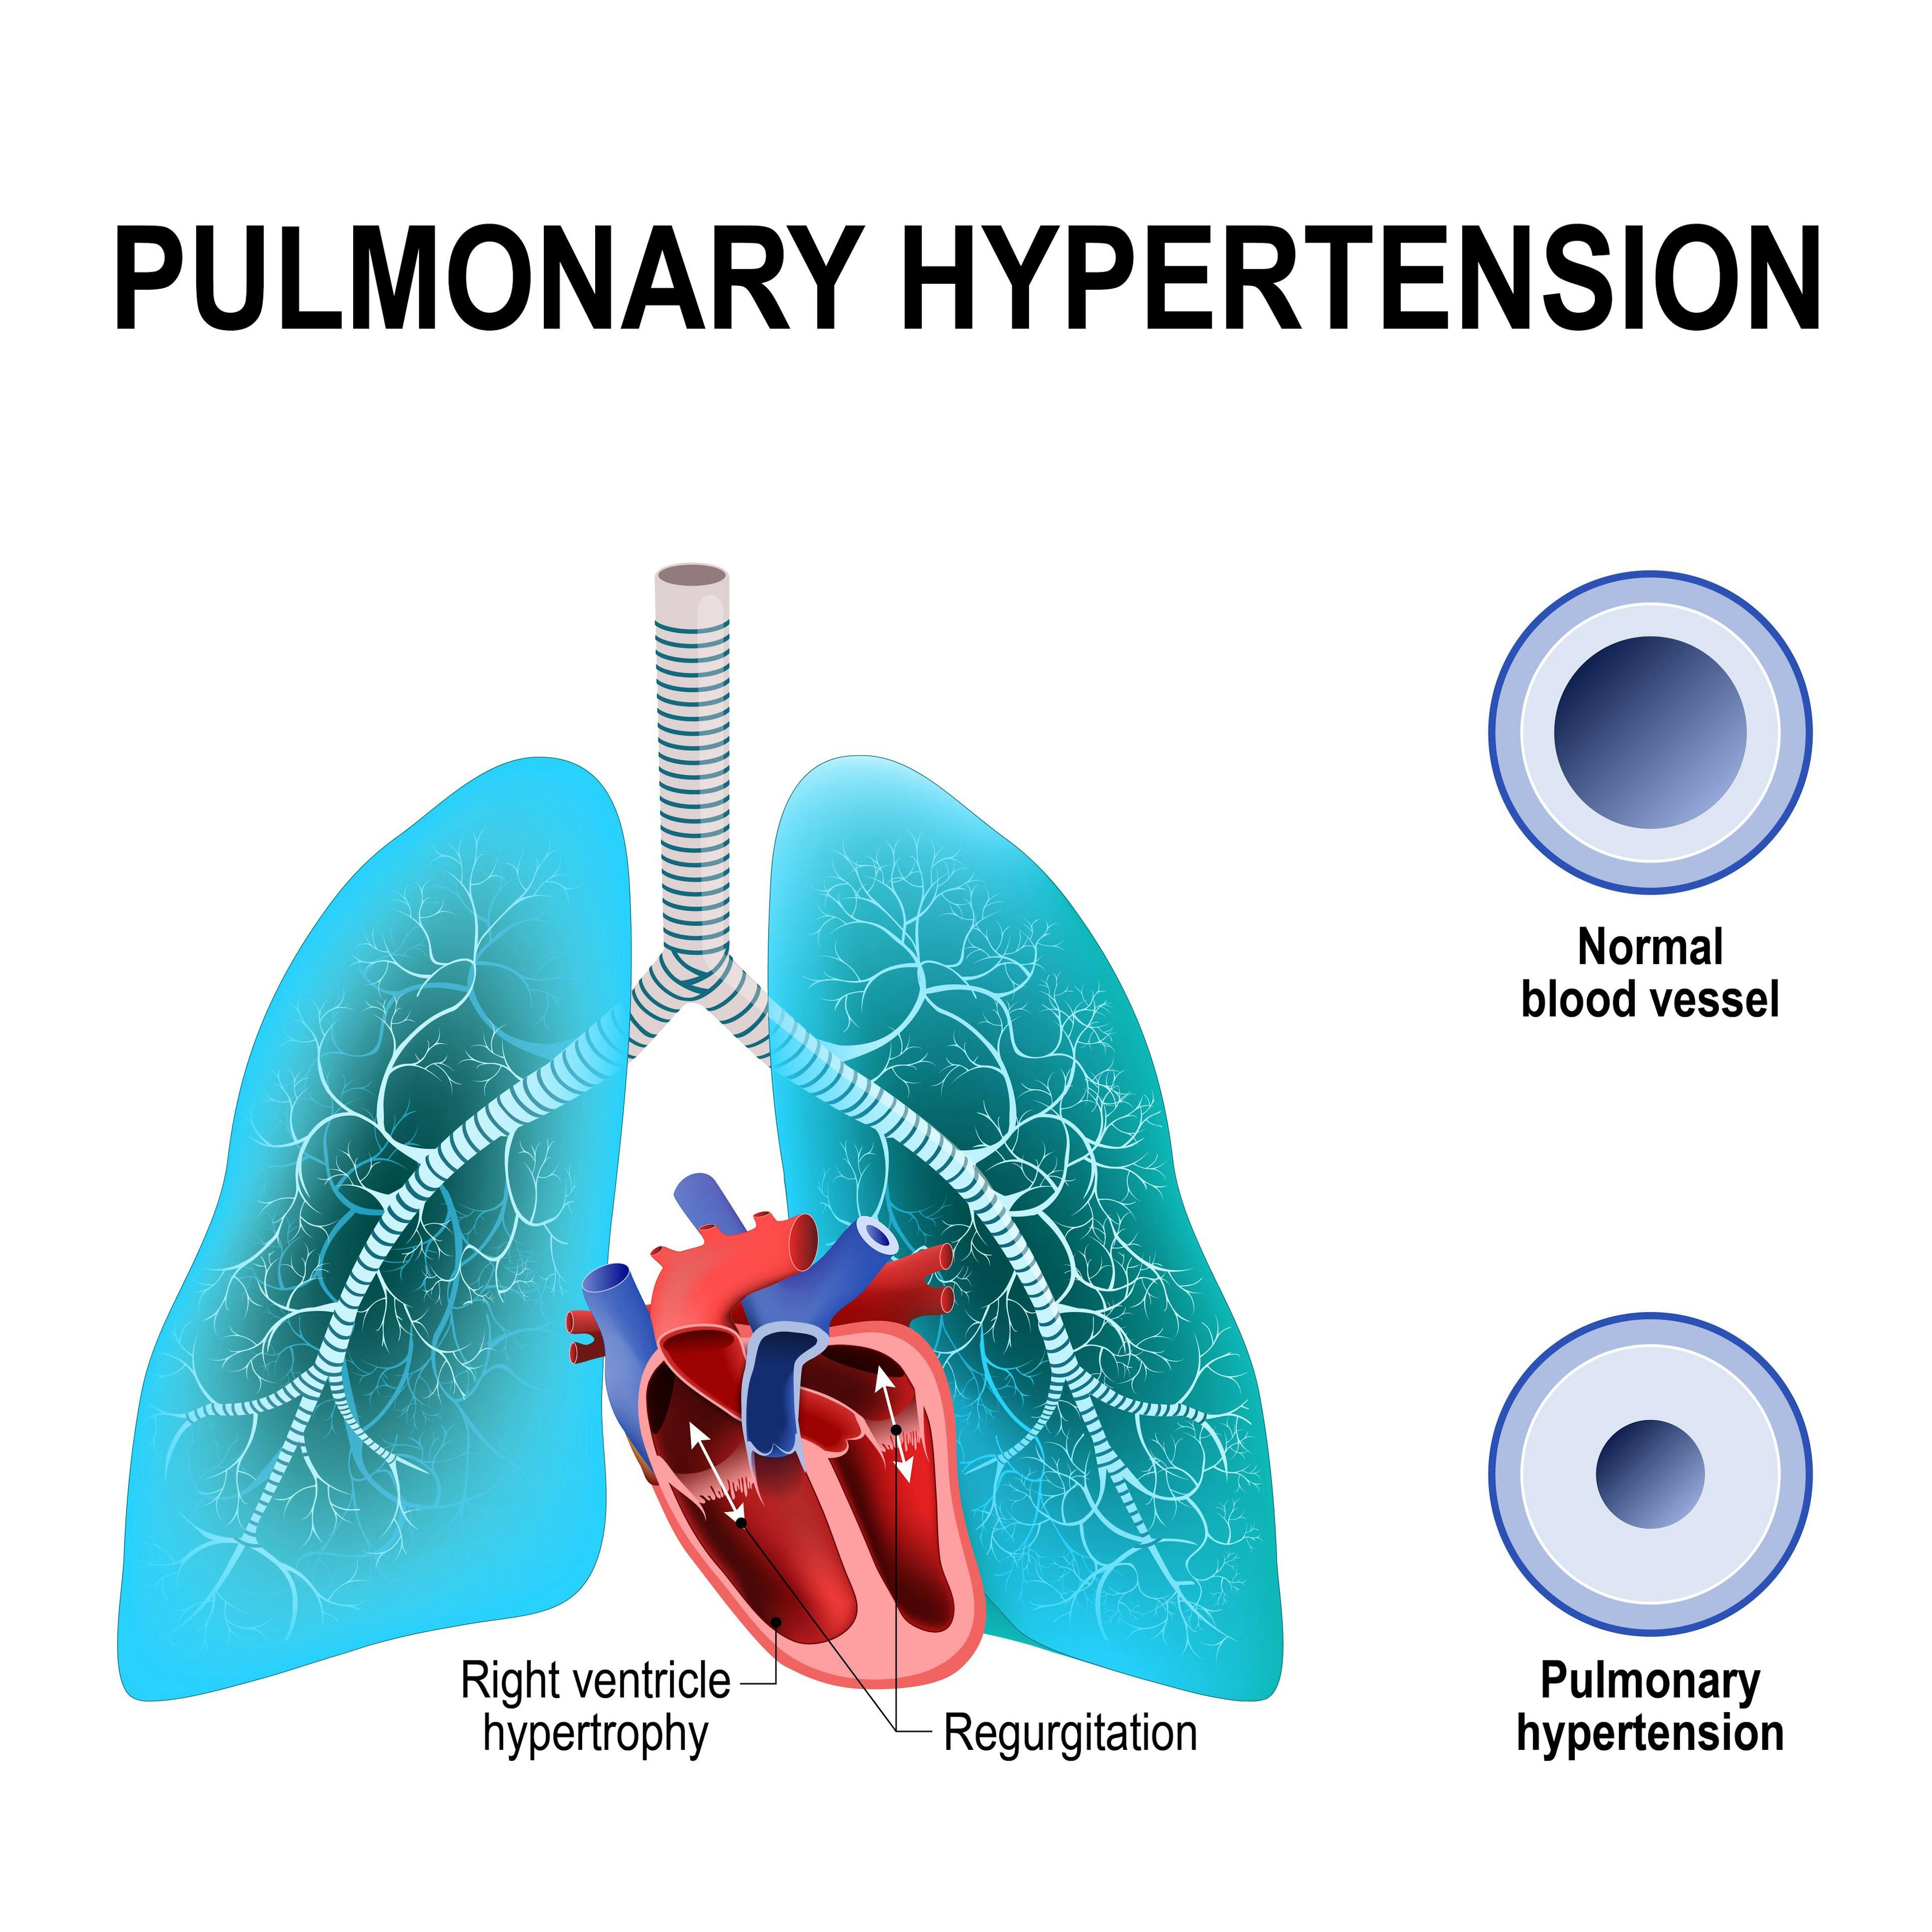 Pulmonary hypertension | Image credit: designua - stock.adobe.com